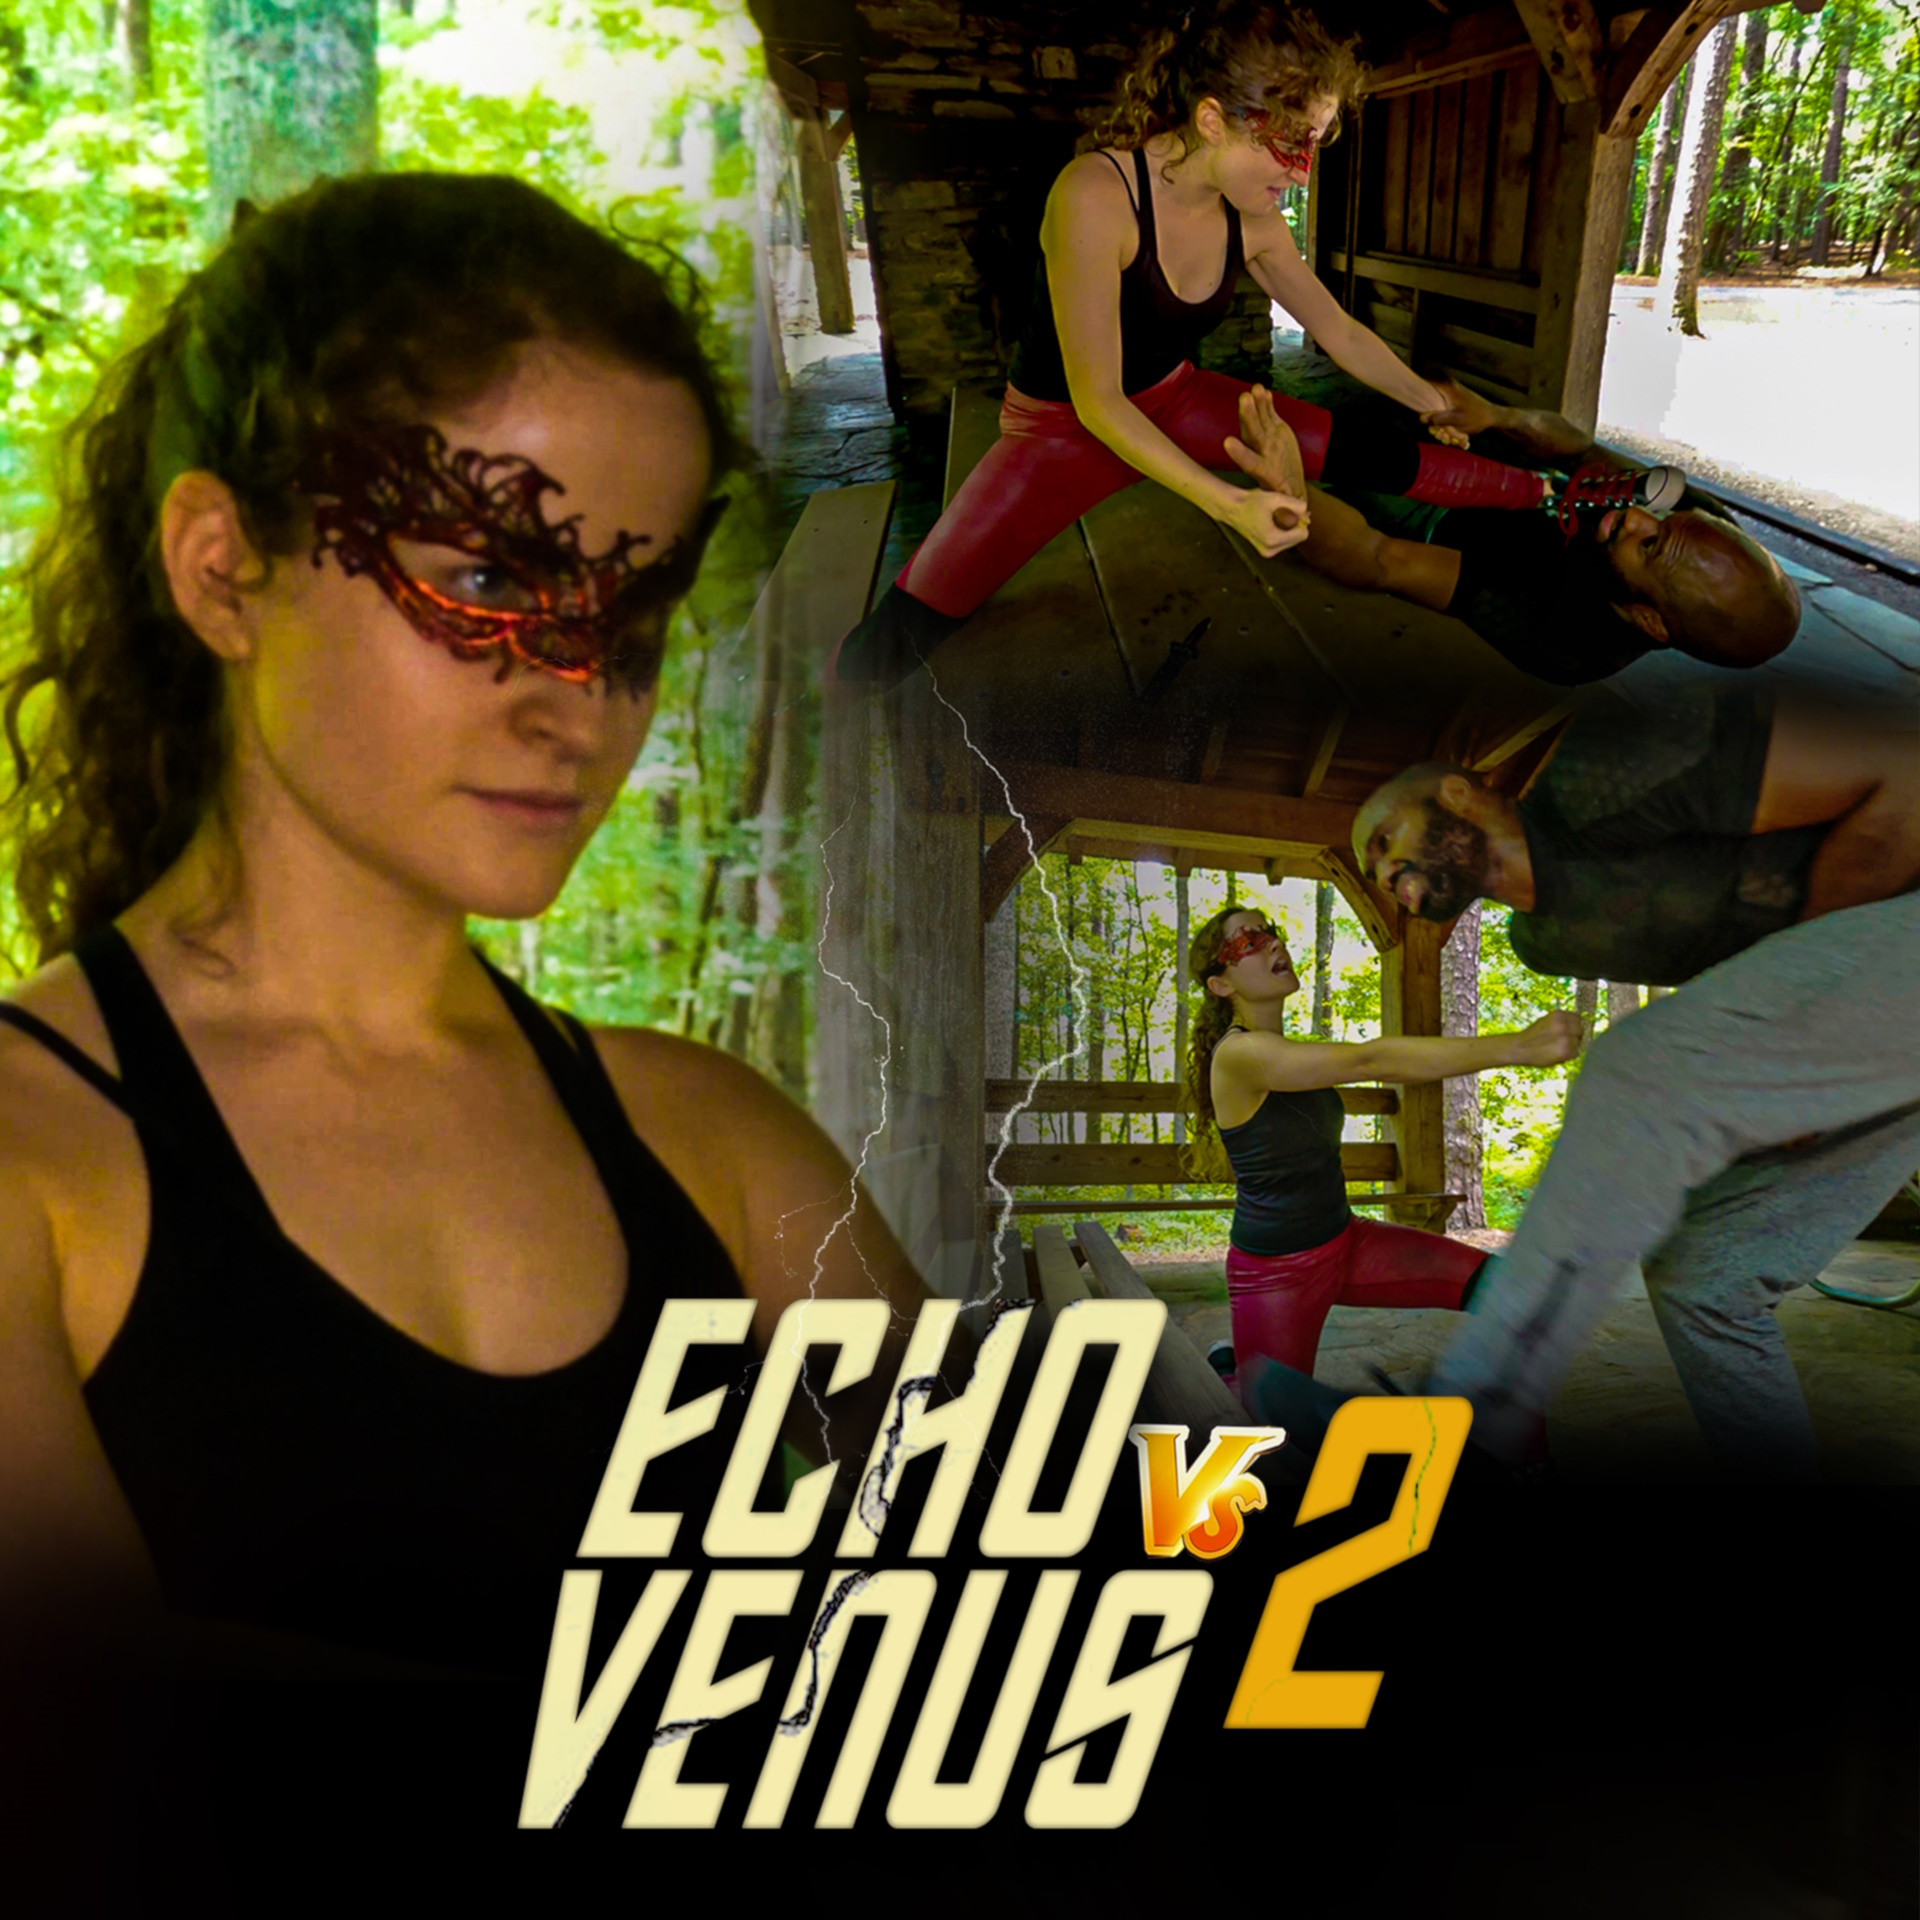 Echo vs. Venus 2: The Bounty